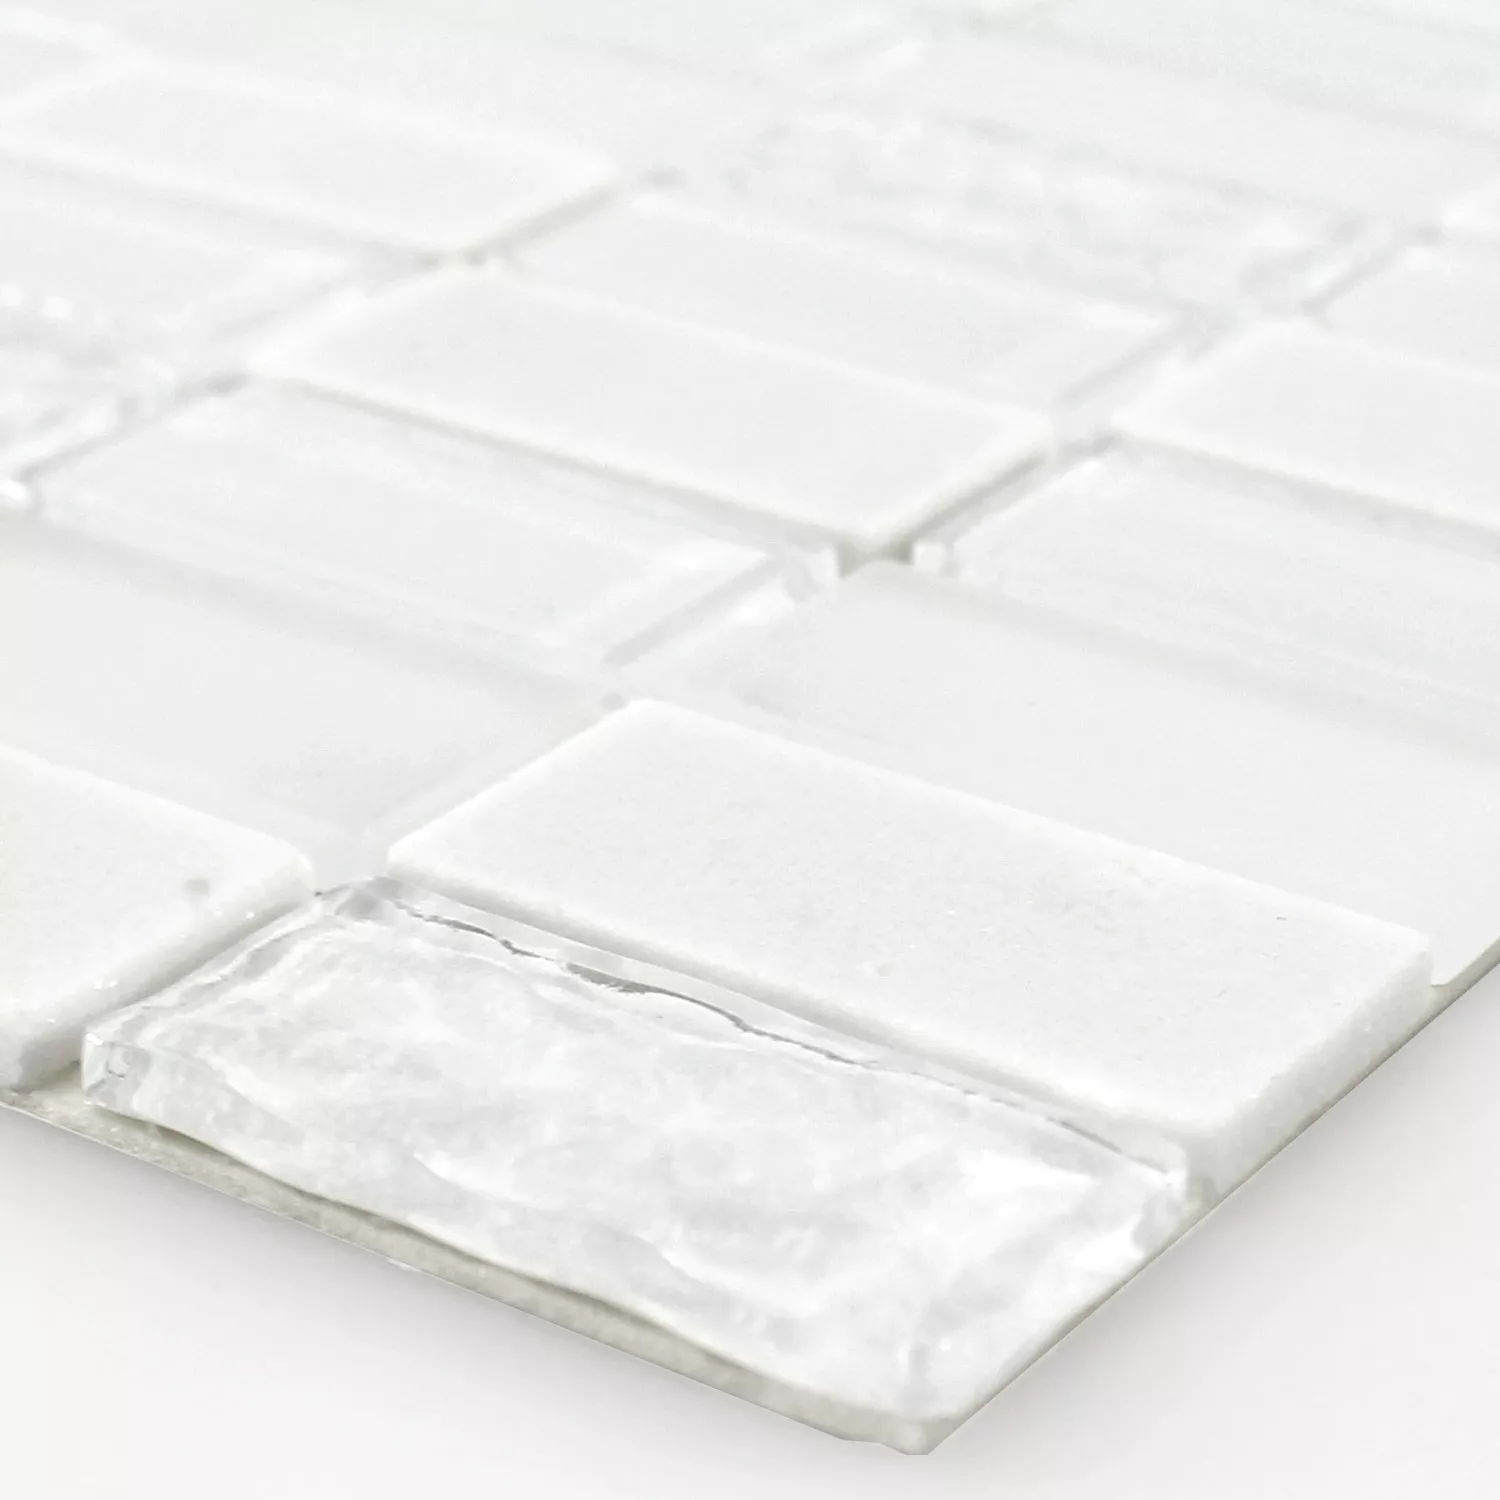 Sample Zelfklevende Mozaïek Natuursteen Glas Mix Wit Glanzend